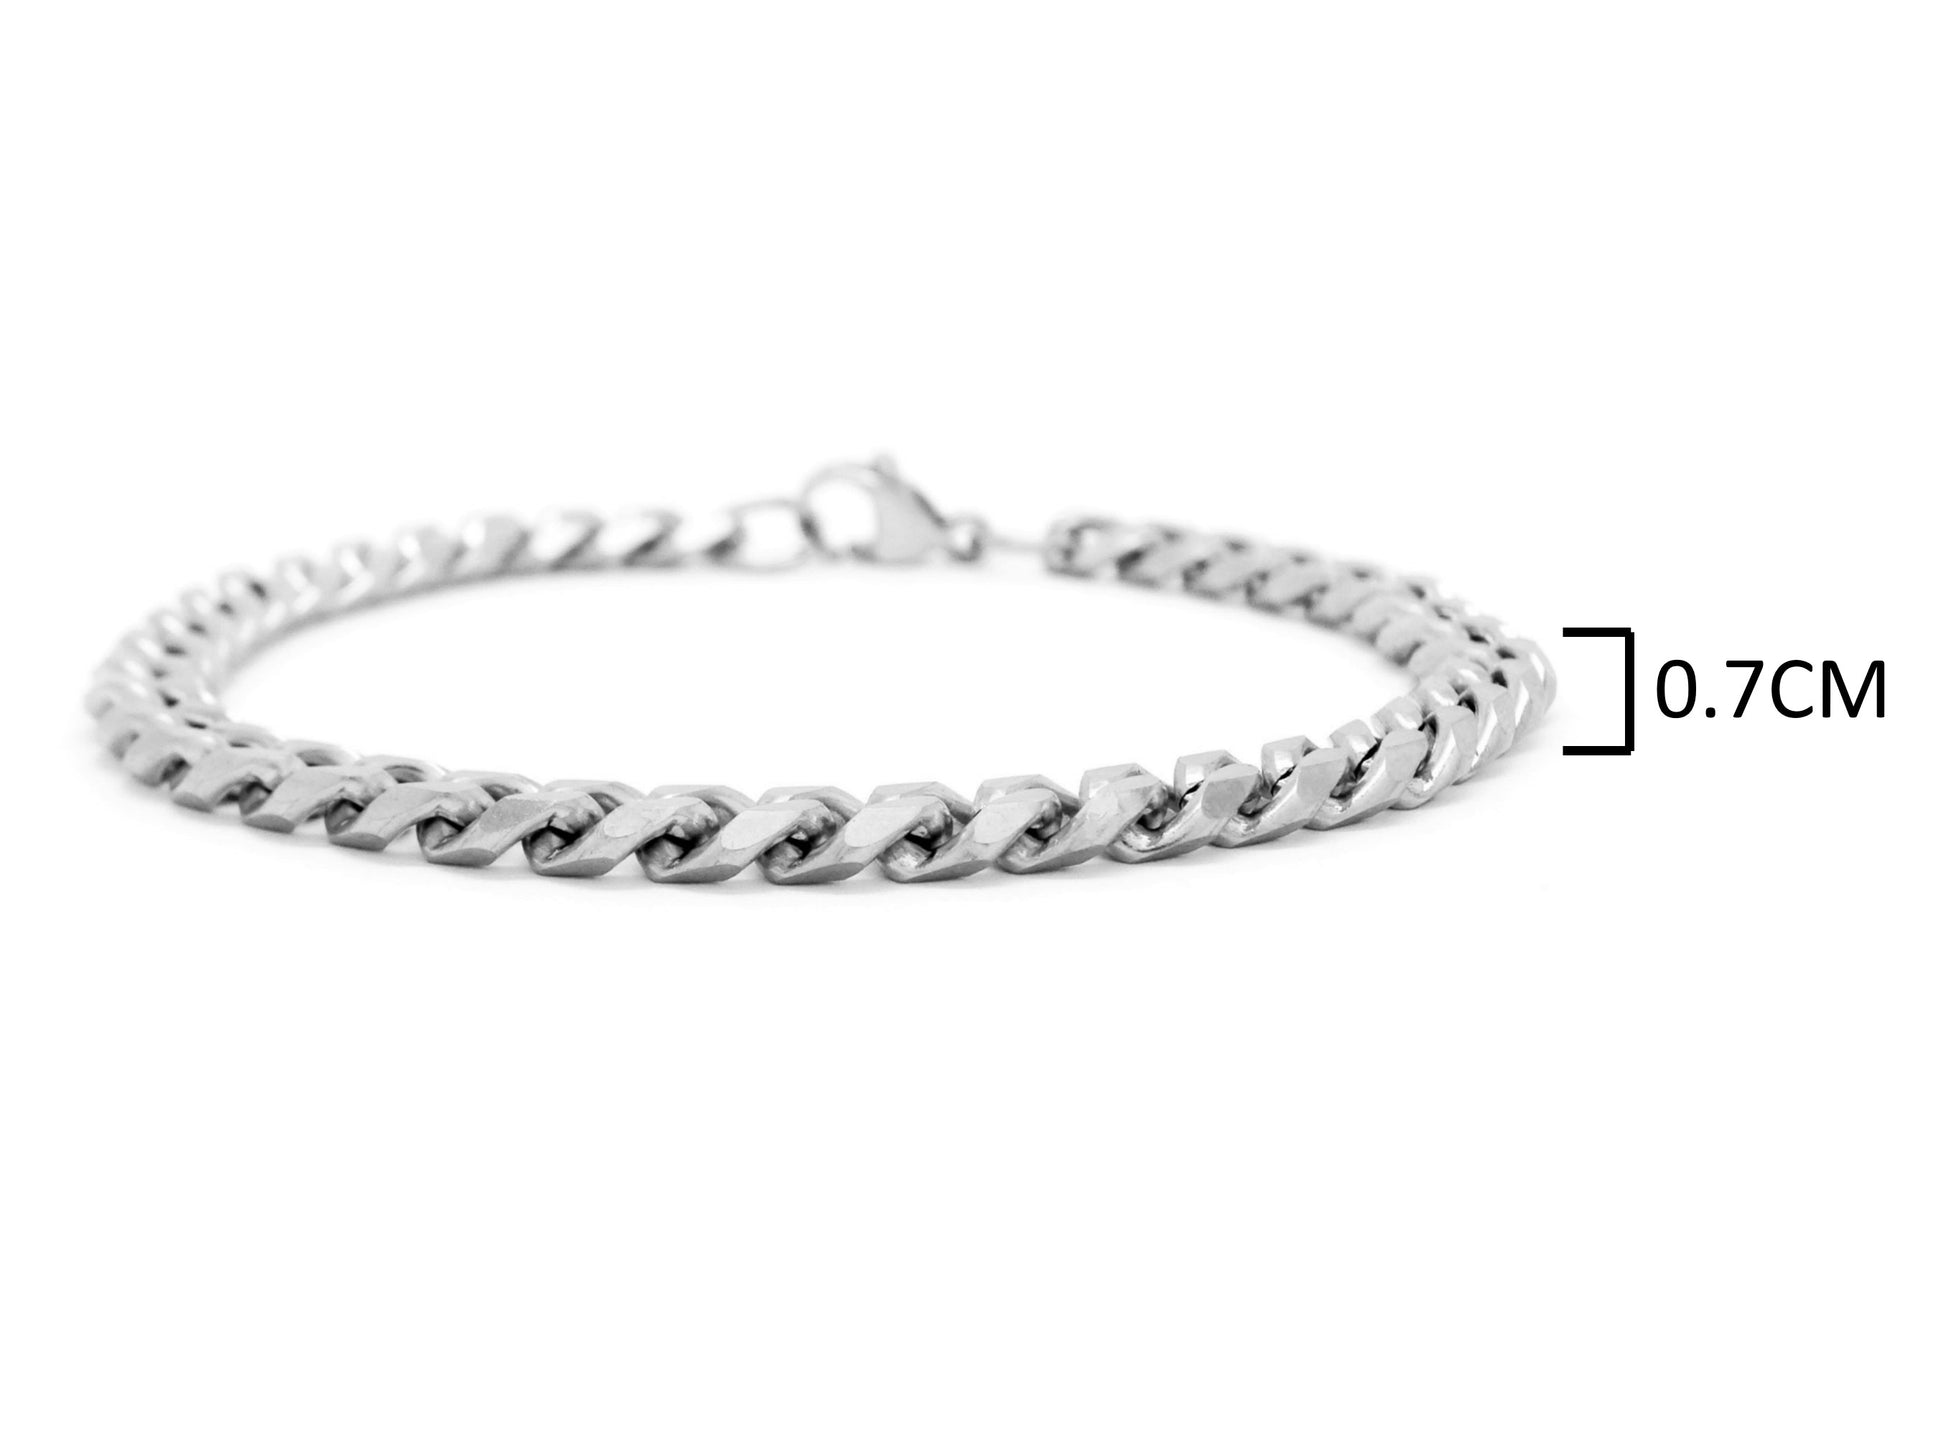 Stainless steel curb link bracelet MEASUREMENT